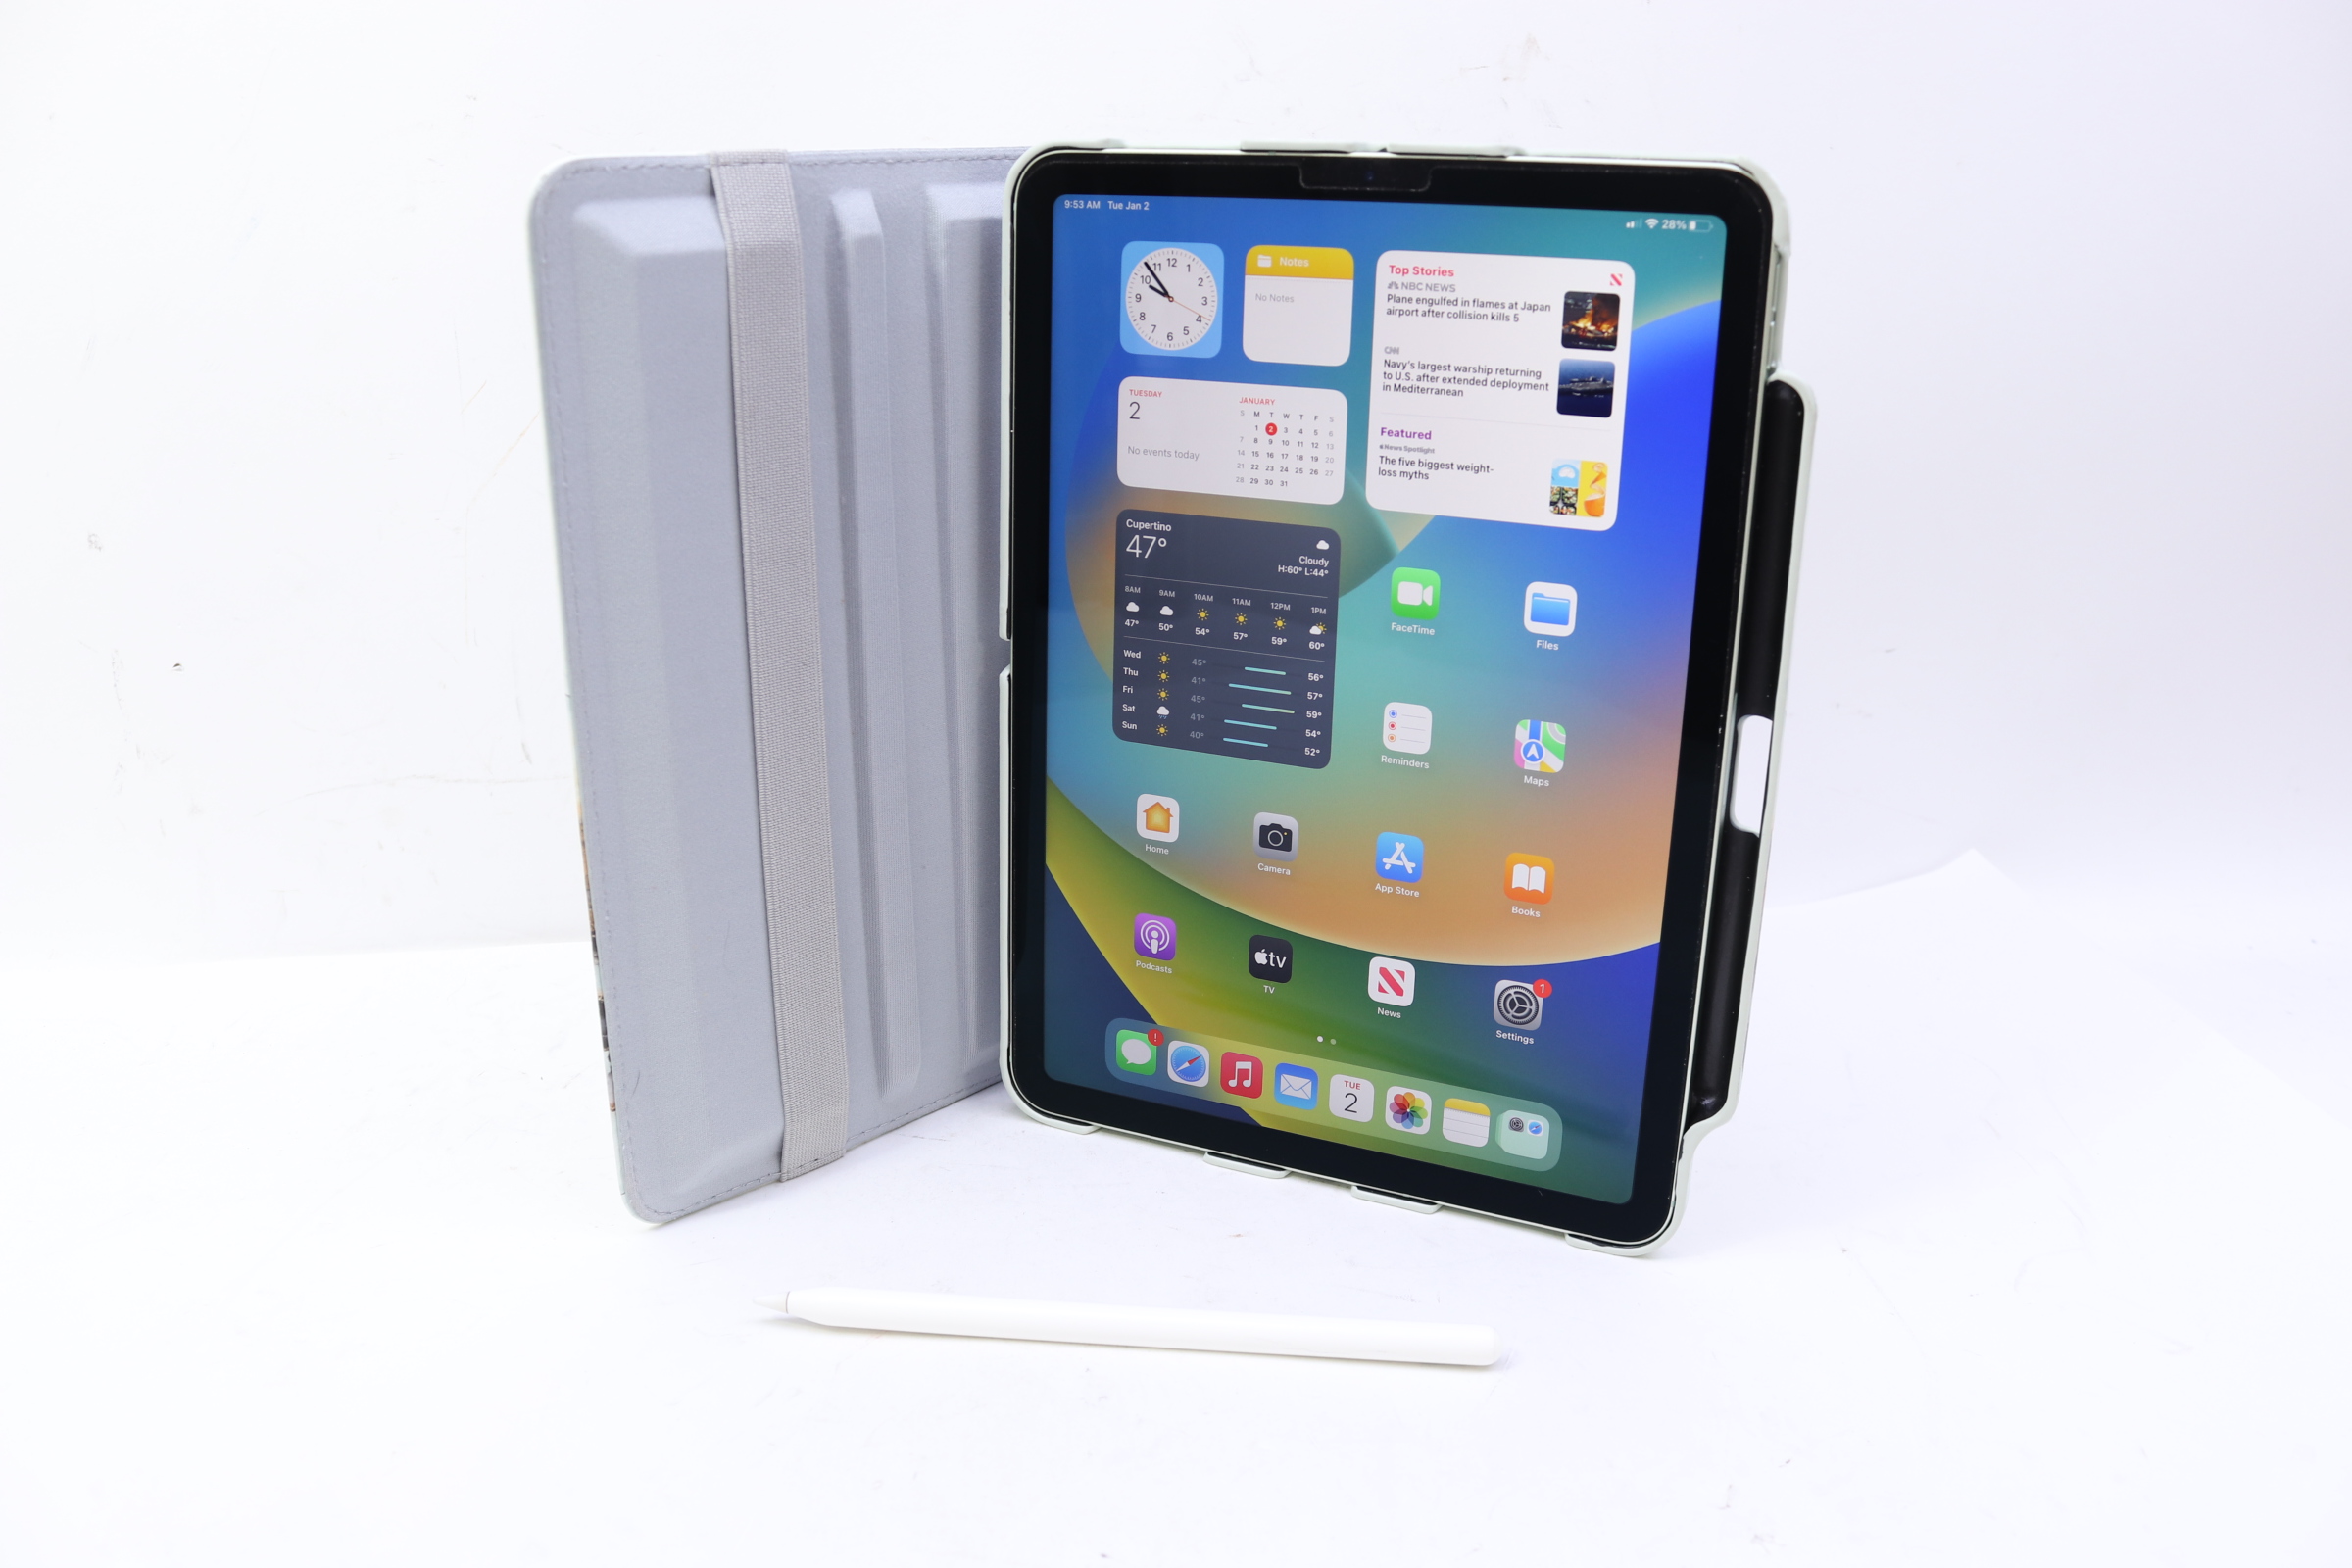 Apple iPad Air 4th Gen Wi-Fi + Cellular (Unlocked), 10.9in - 64GB 256GB